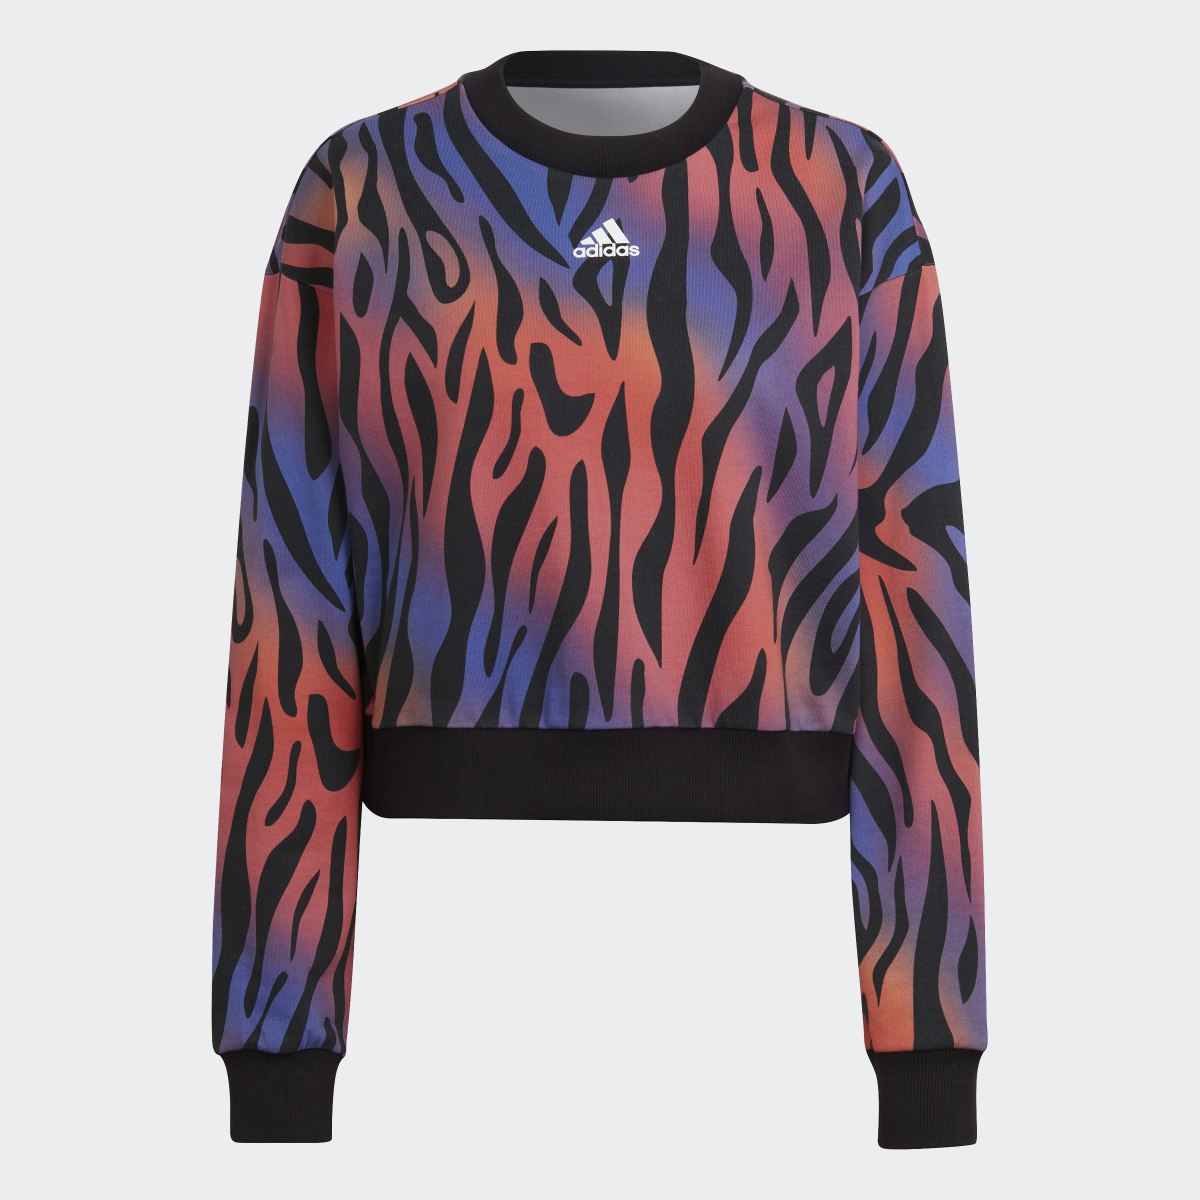 Adidas Tiger-Print Sweatshirt. 6